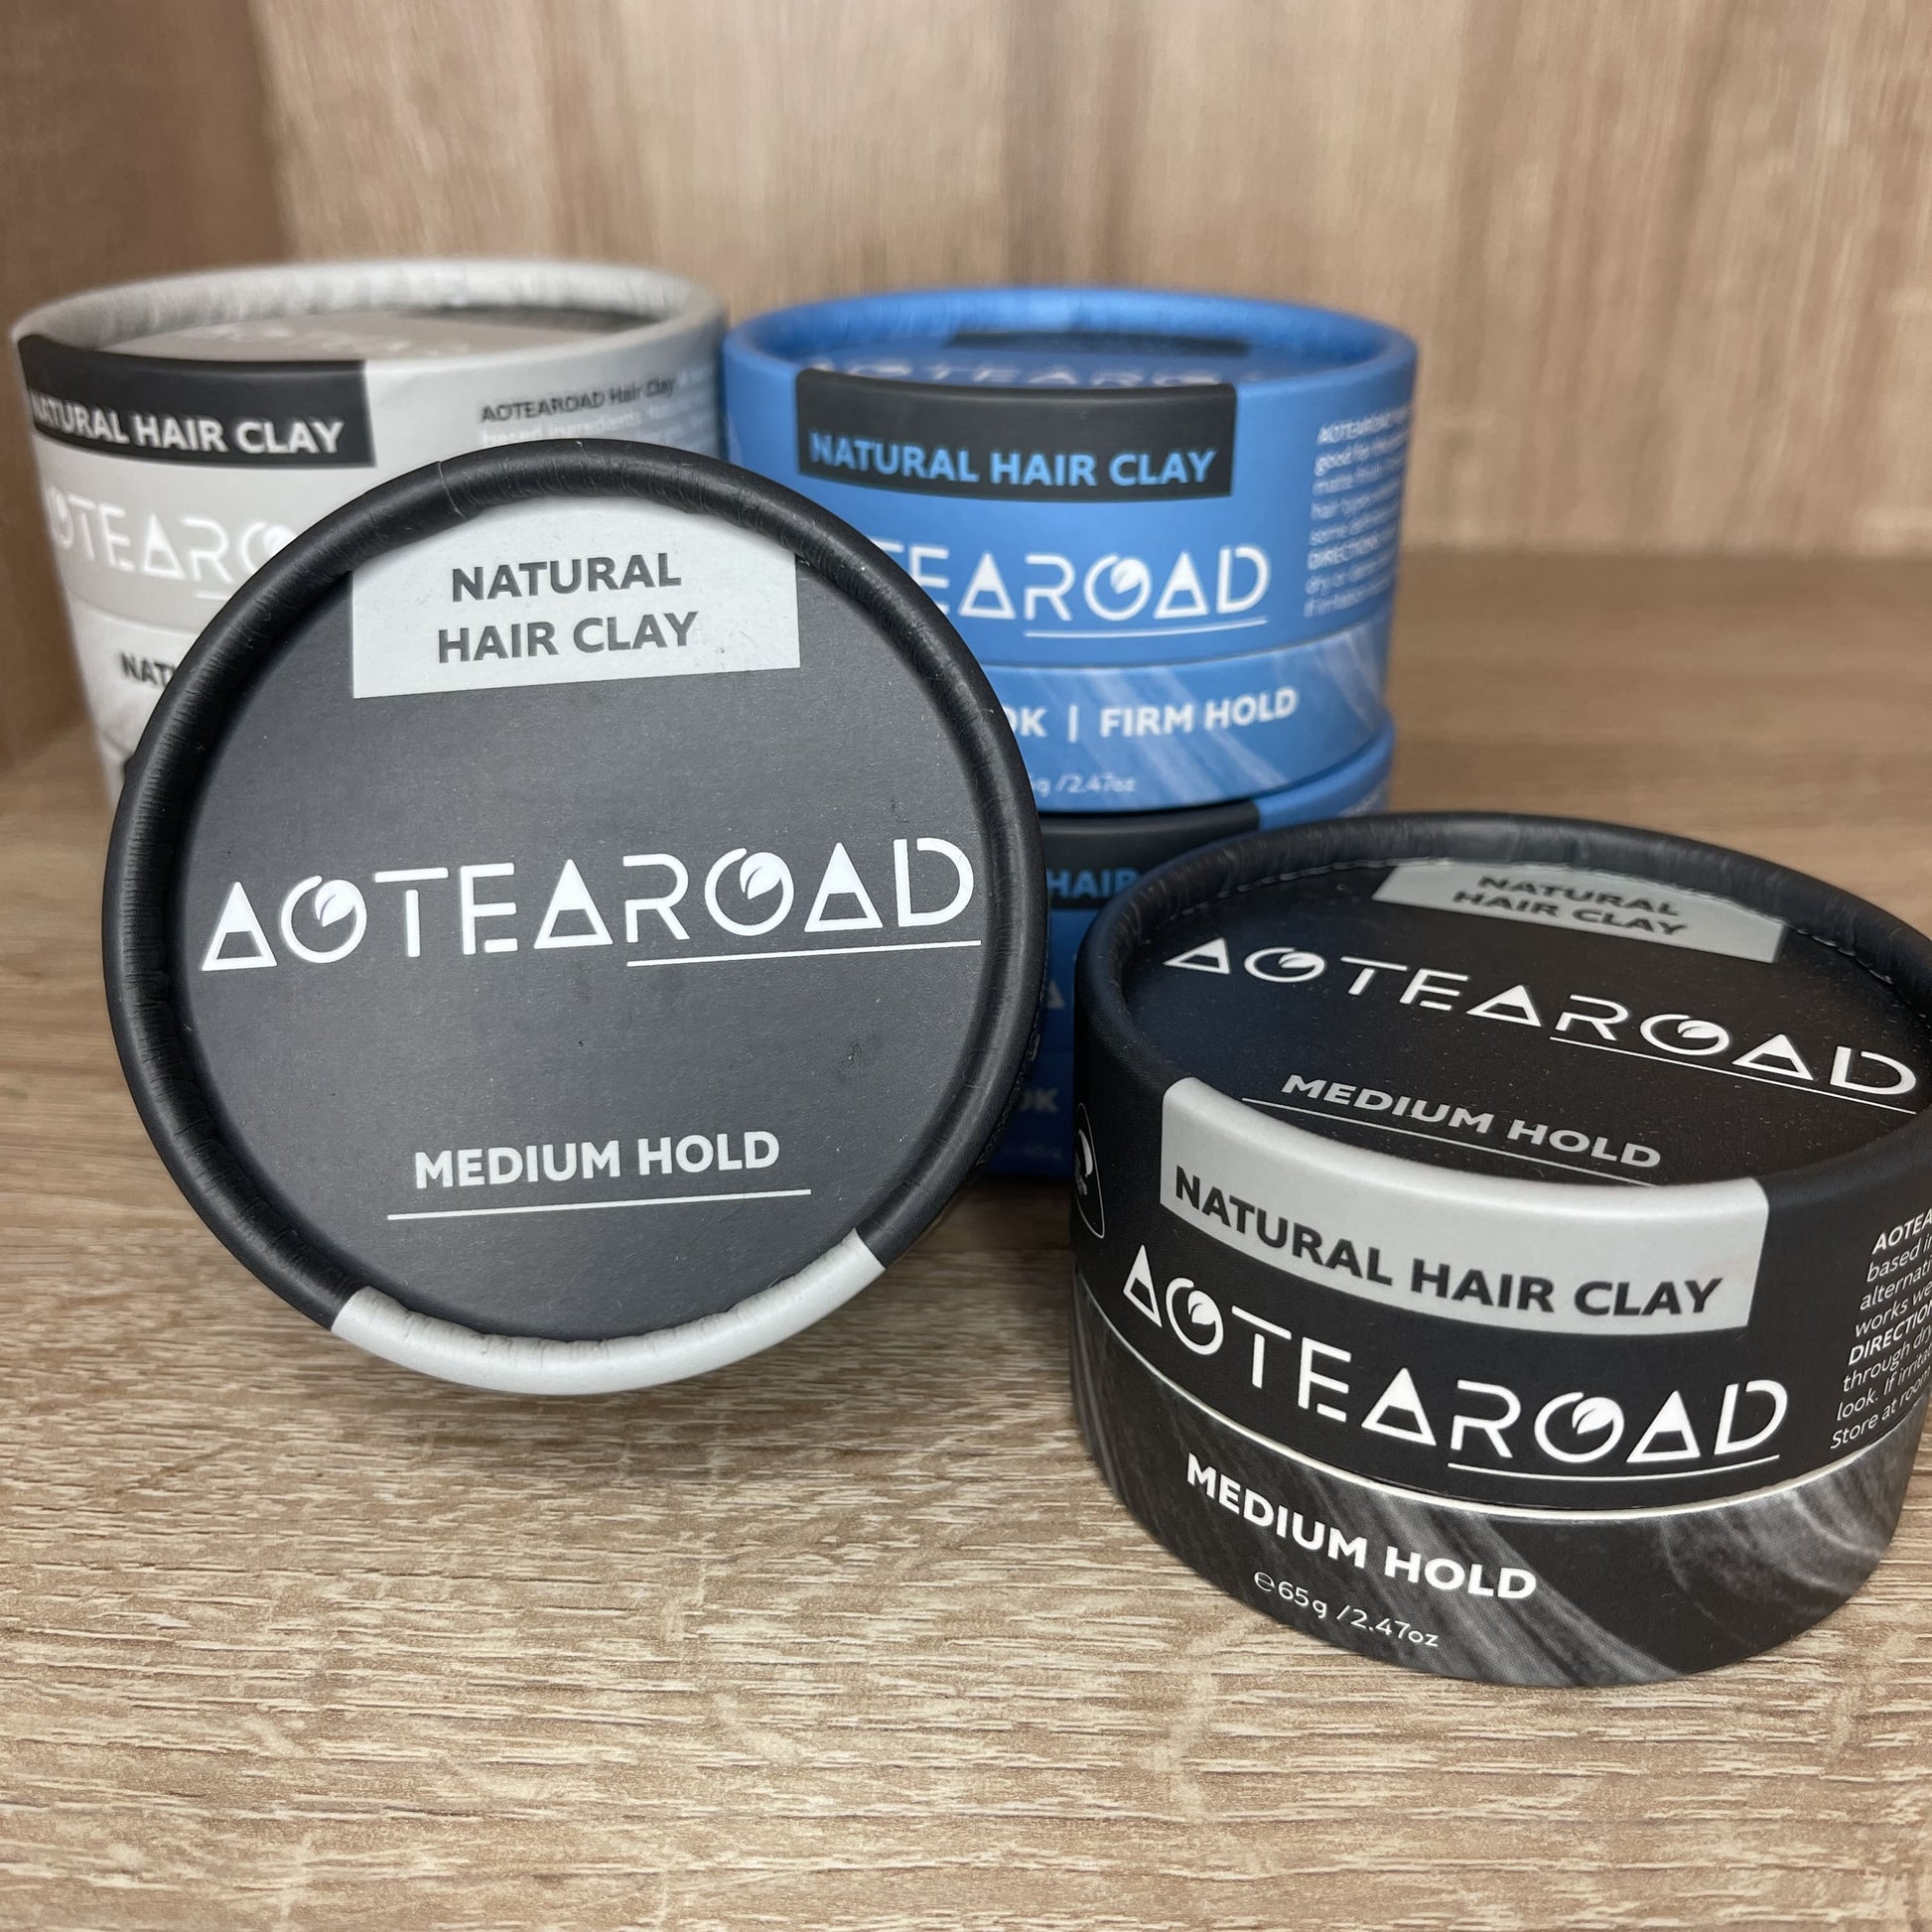 Medium hold hair clay from Aotearoad.